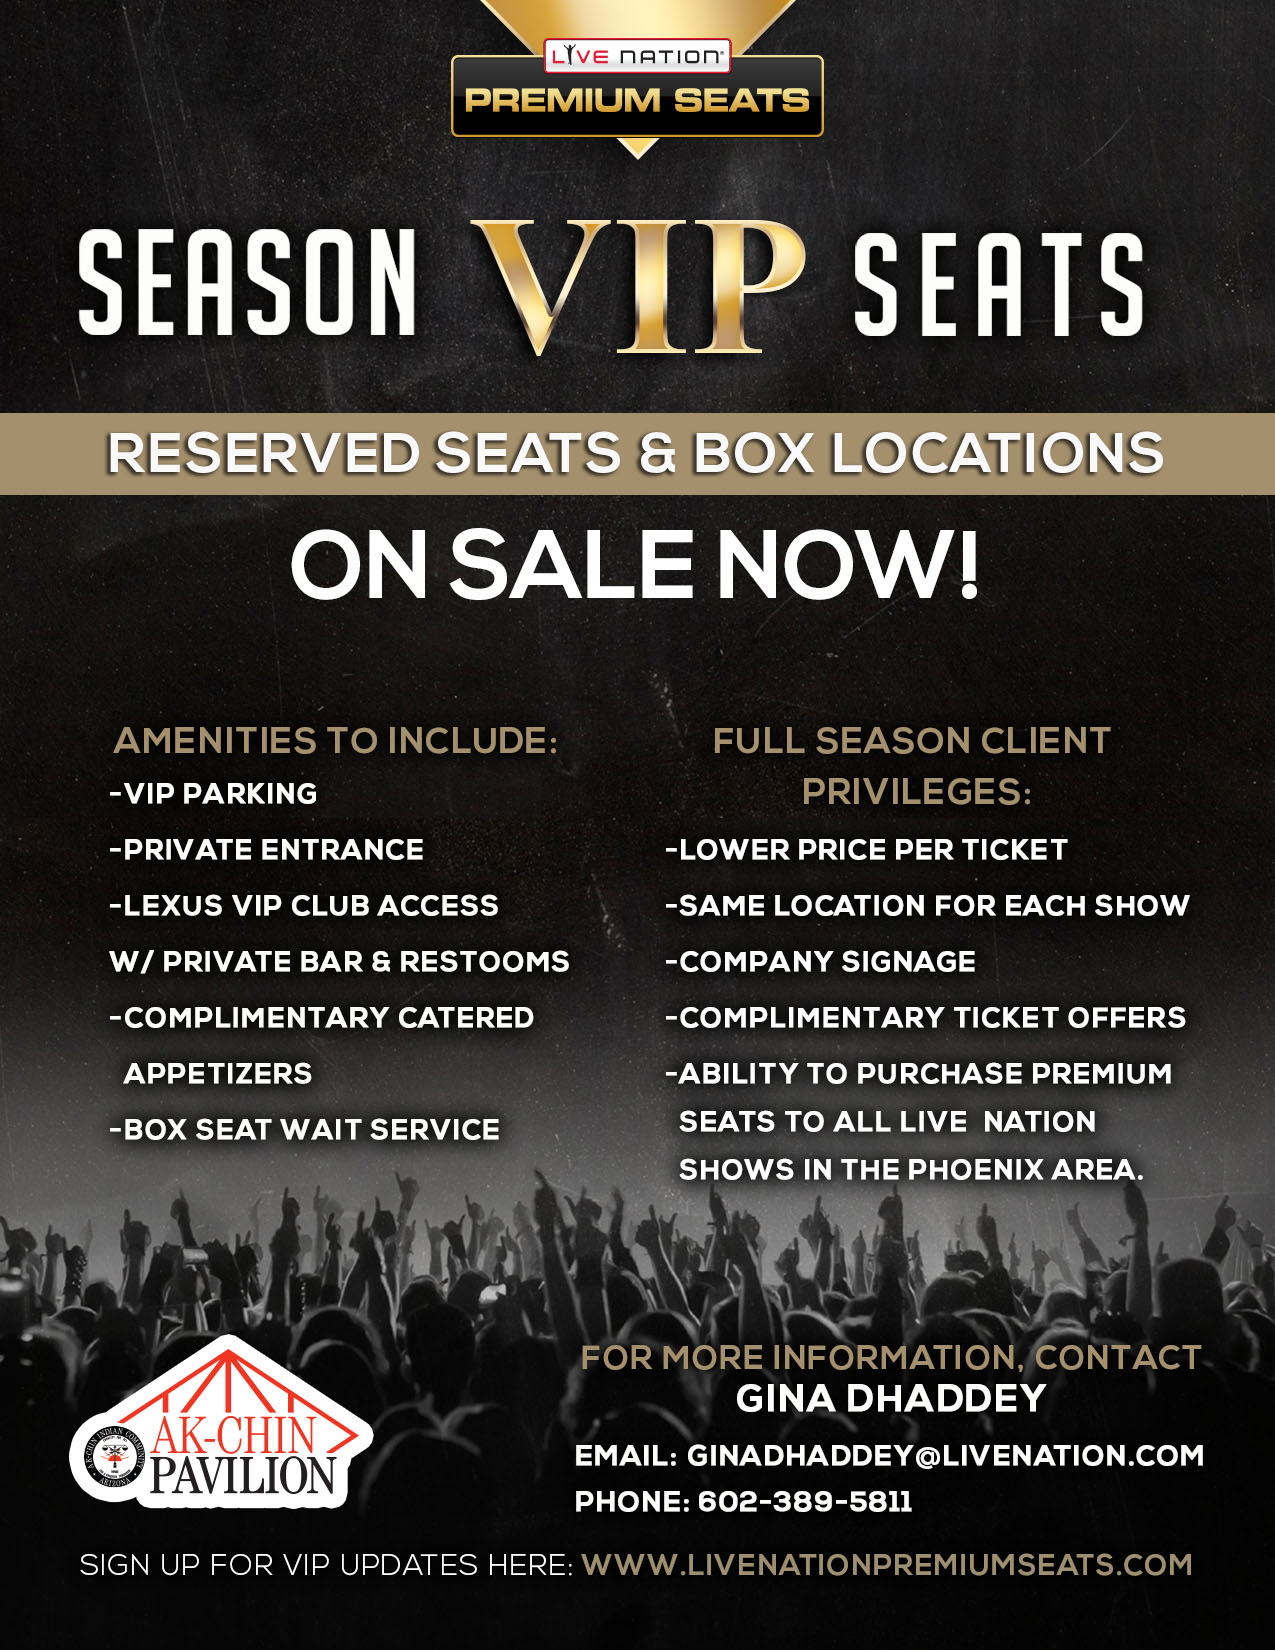  Chin Pavilion 2016 Season Seats Flyer